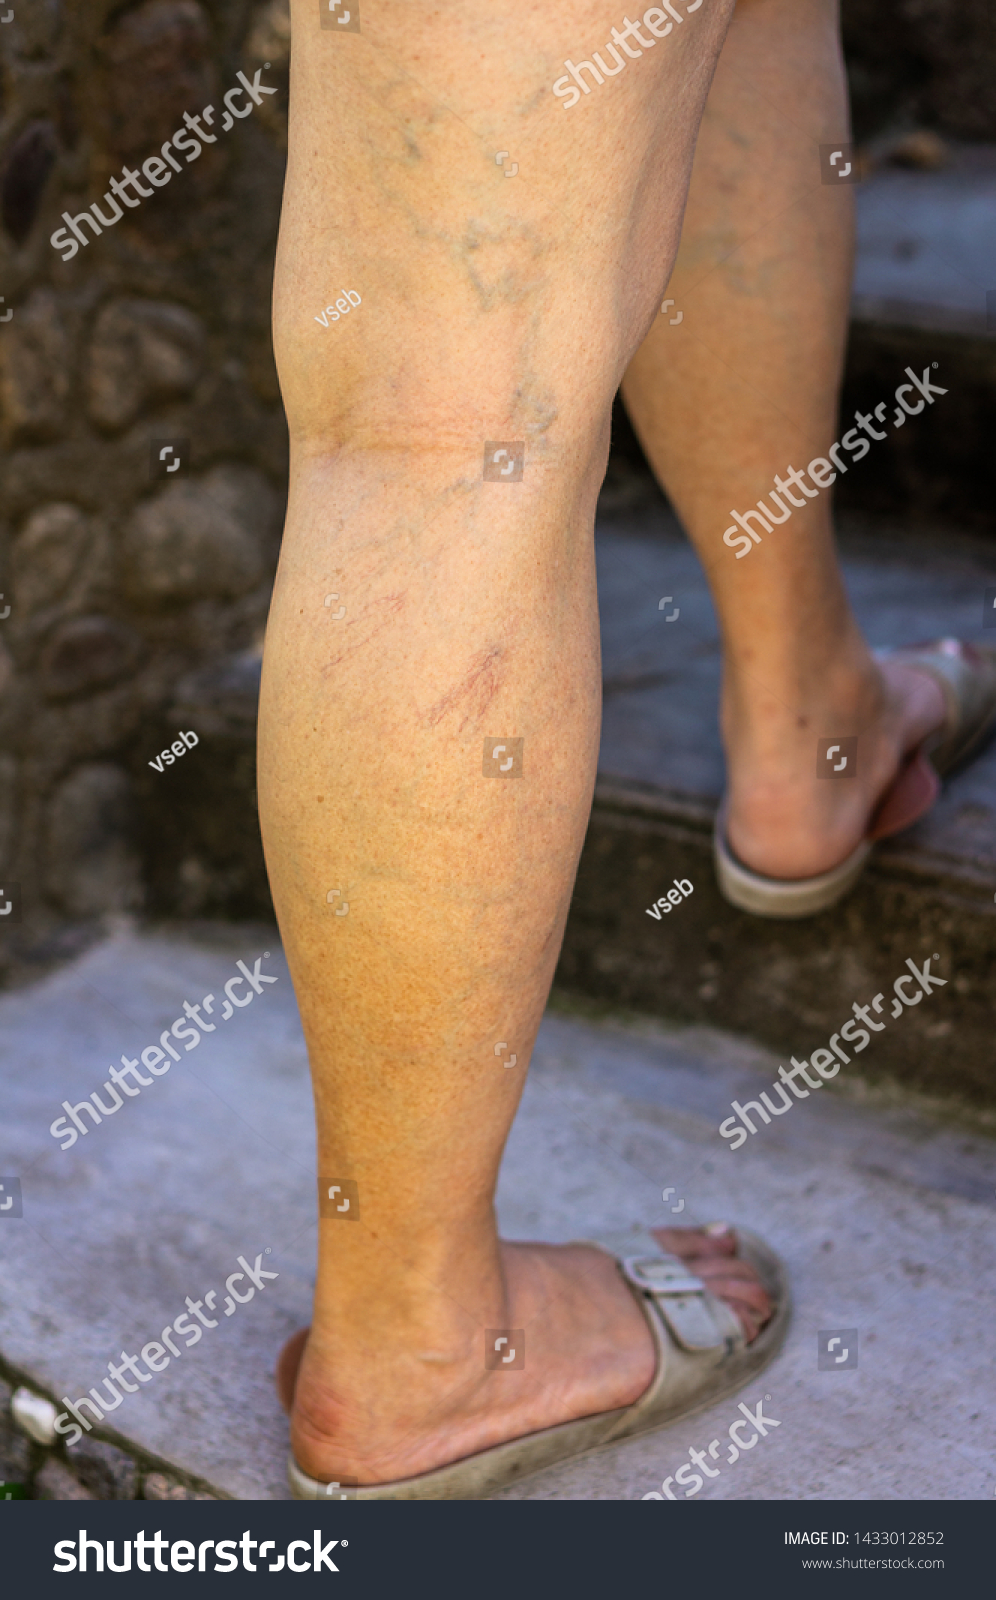 carla ferdinand recommends mature legs pics pic